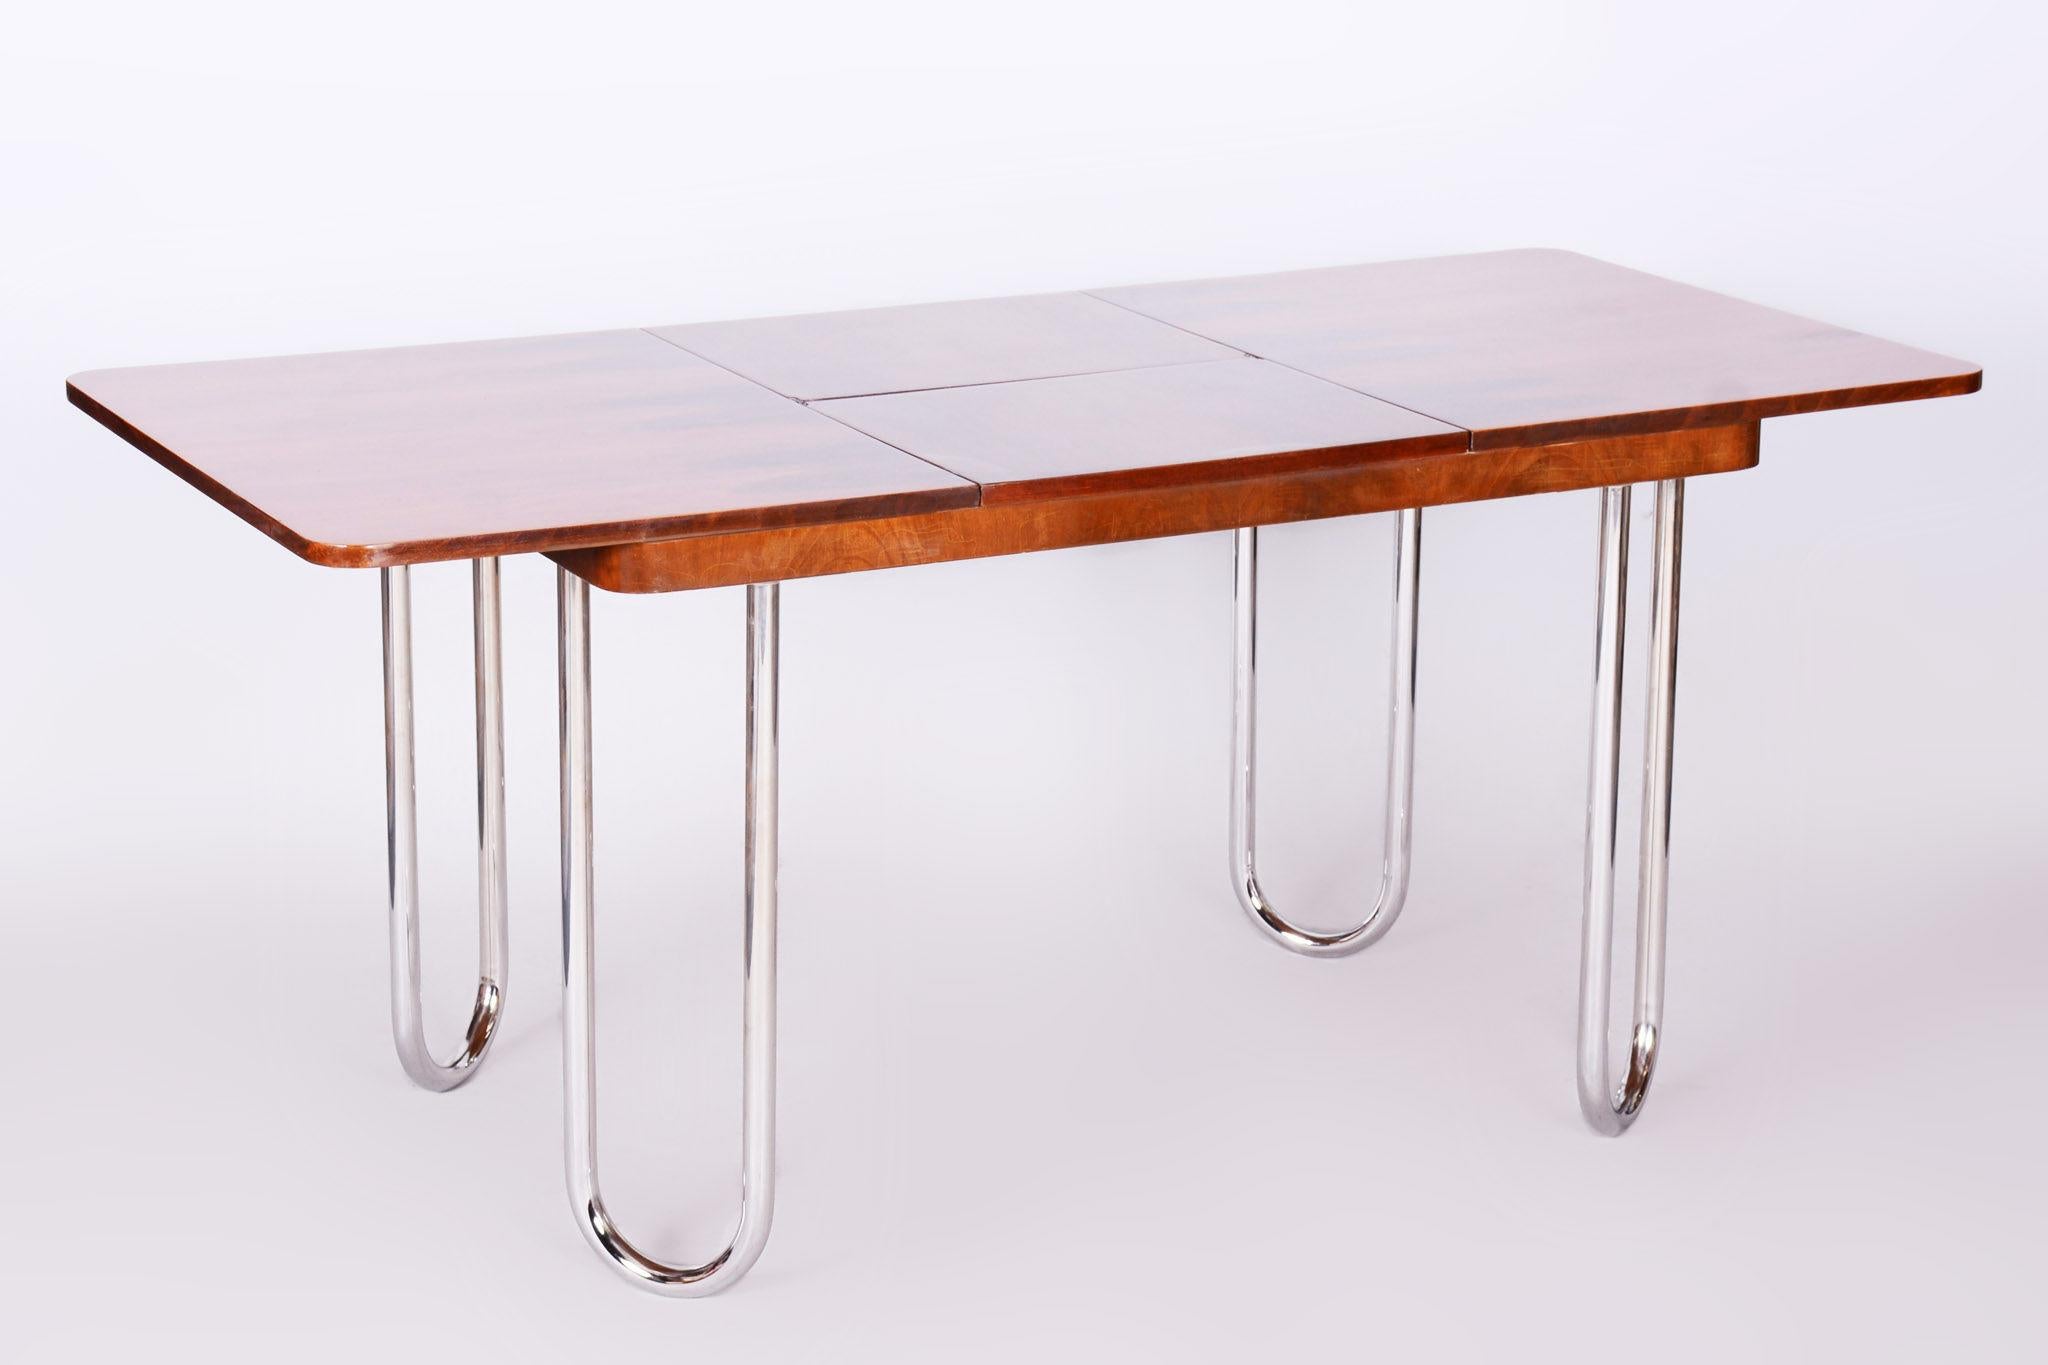 Czech Bauhaus Chrome Folding Dining Table by Halabala, 1930s, Restored, Walnut For Sale 2